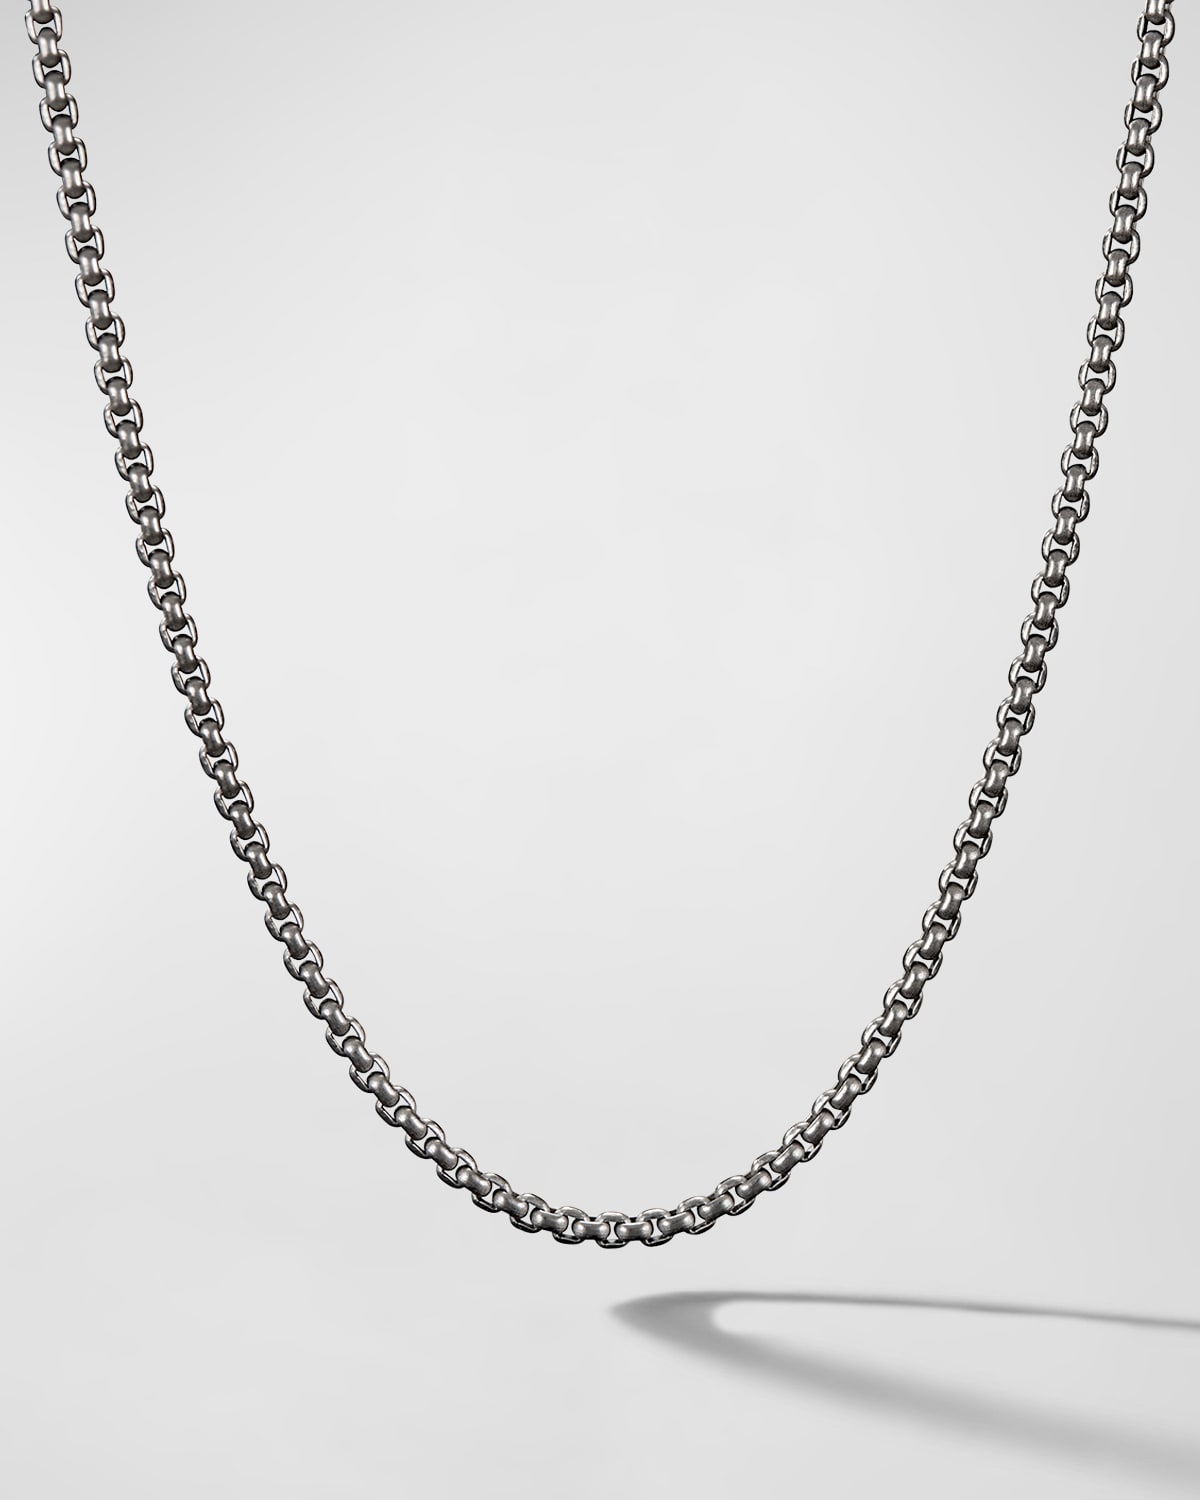 Men's Box Chain Necklace in Titanium, 2.7mm, 26"L